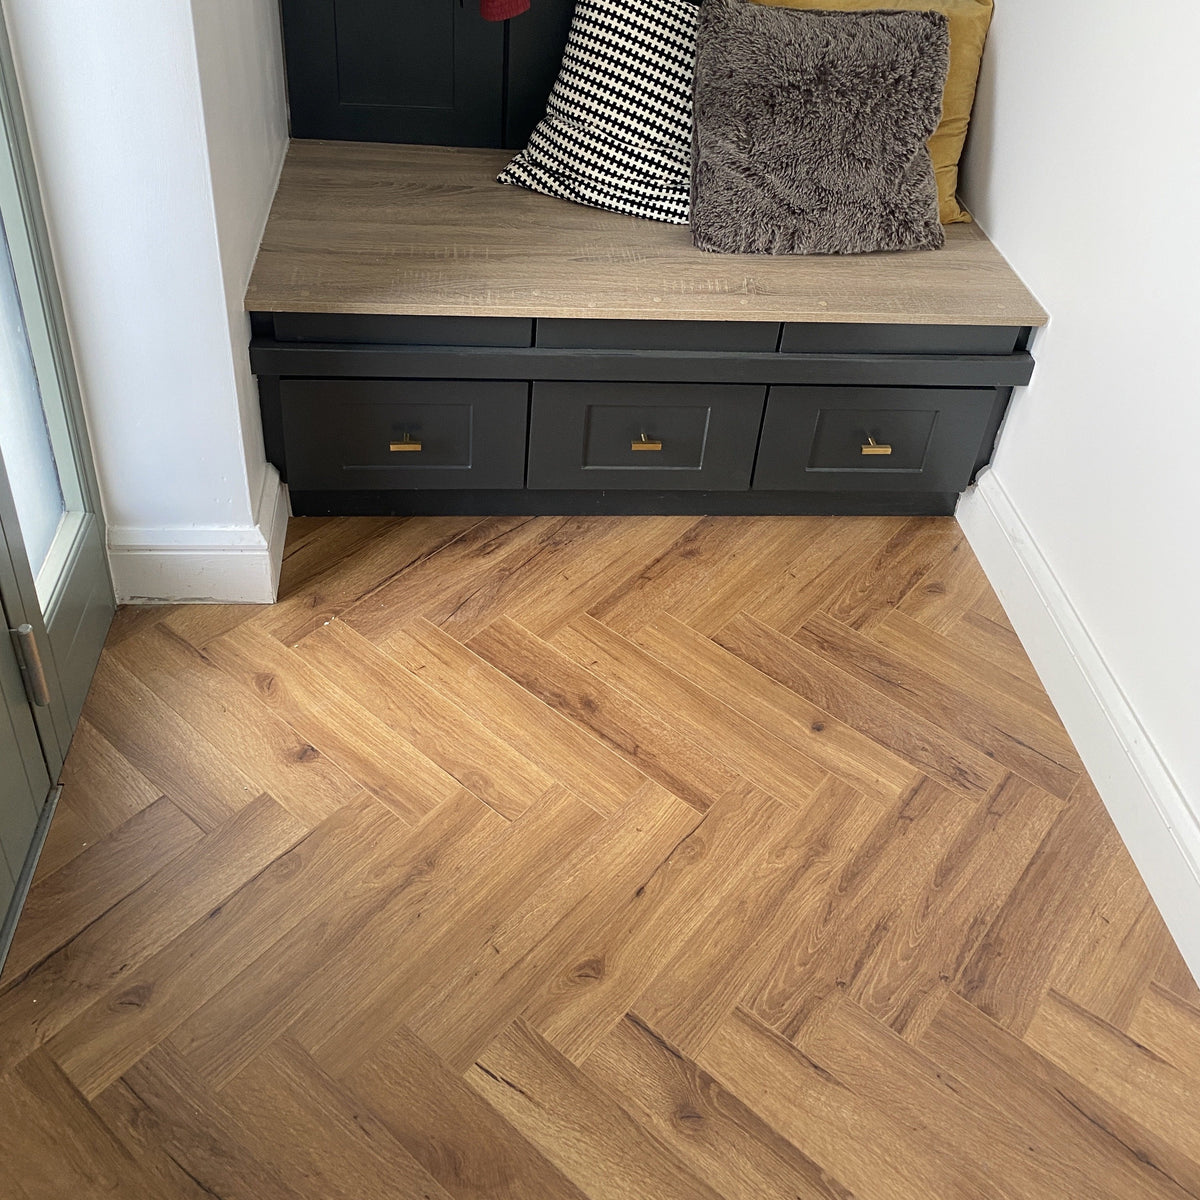 Laminate Herringbone Floor Fumed Oak 12mm Flooring Home Interior Design Kitchen Living Room